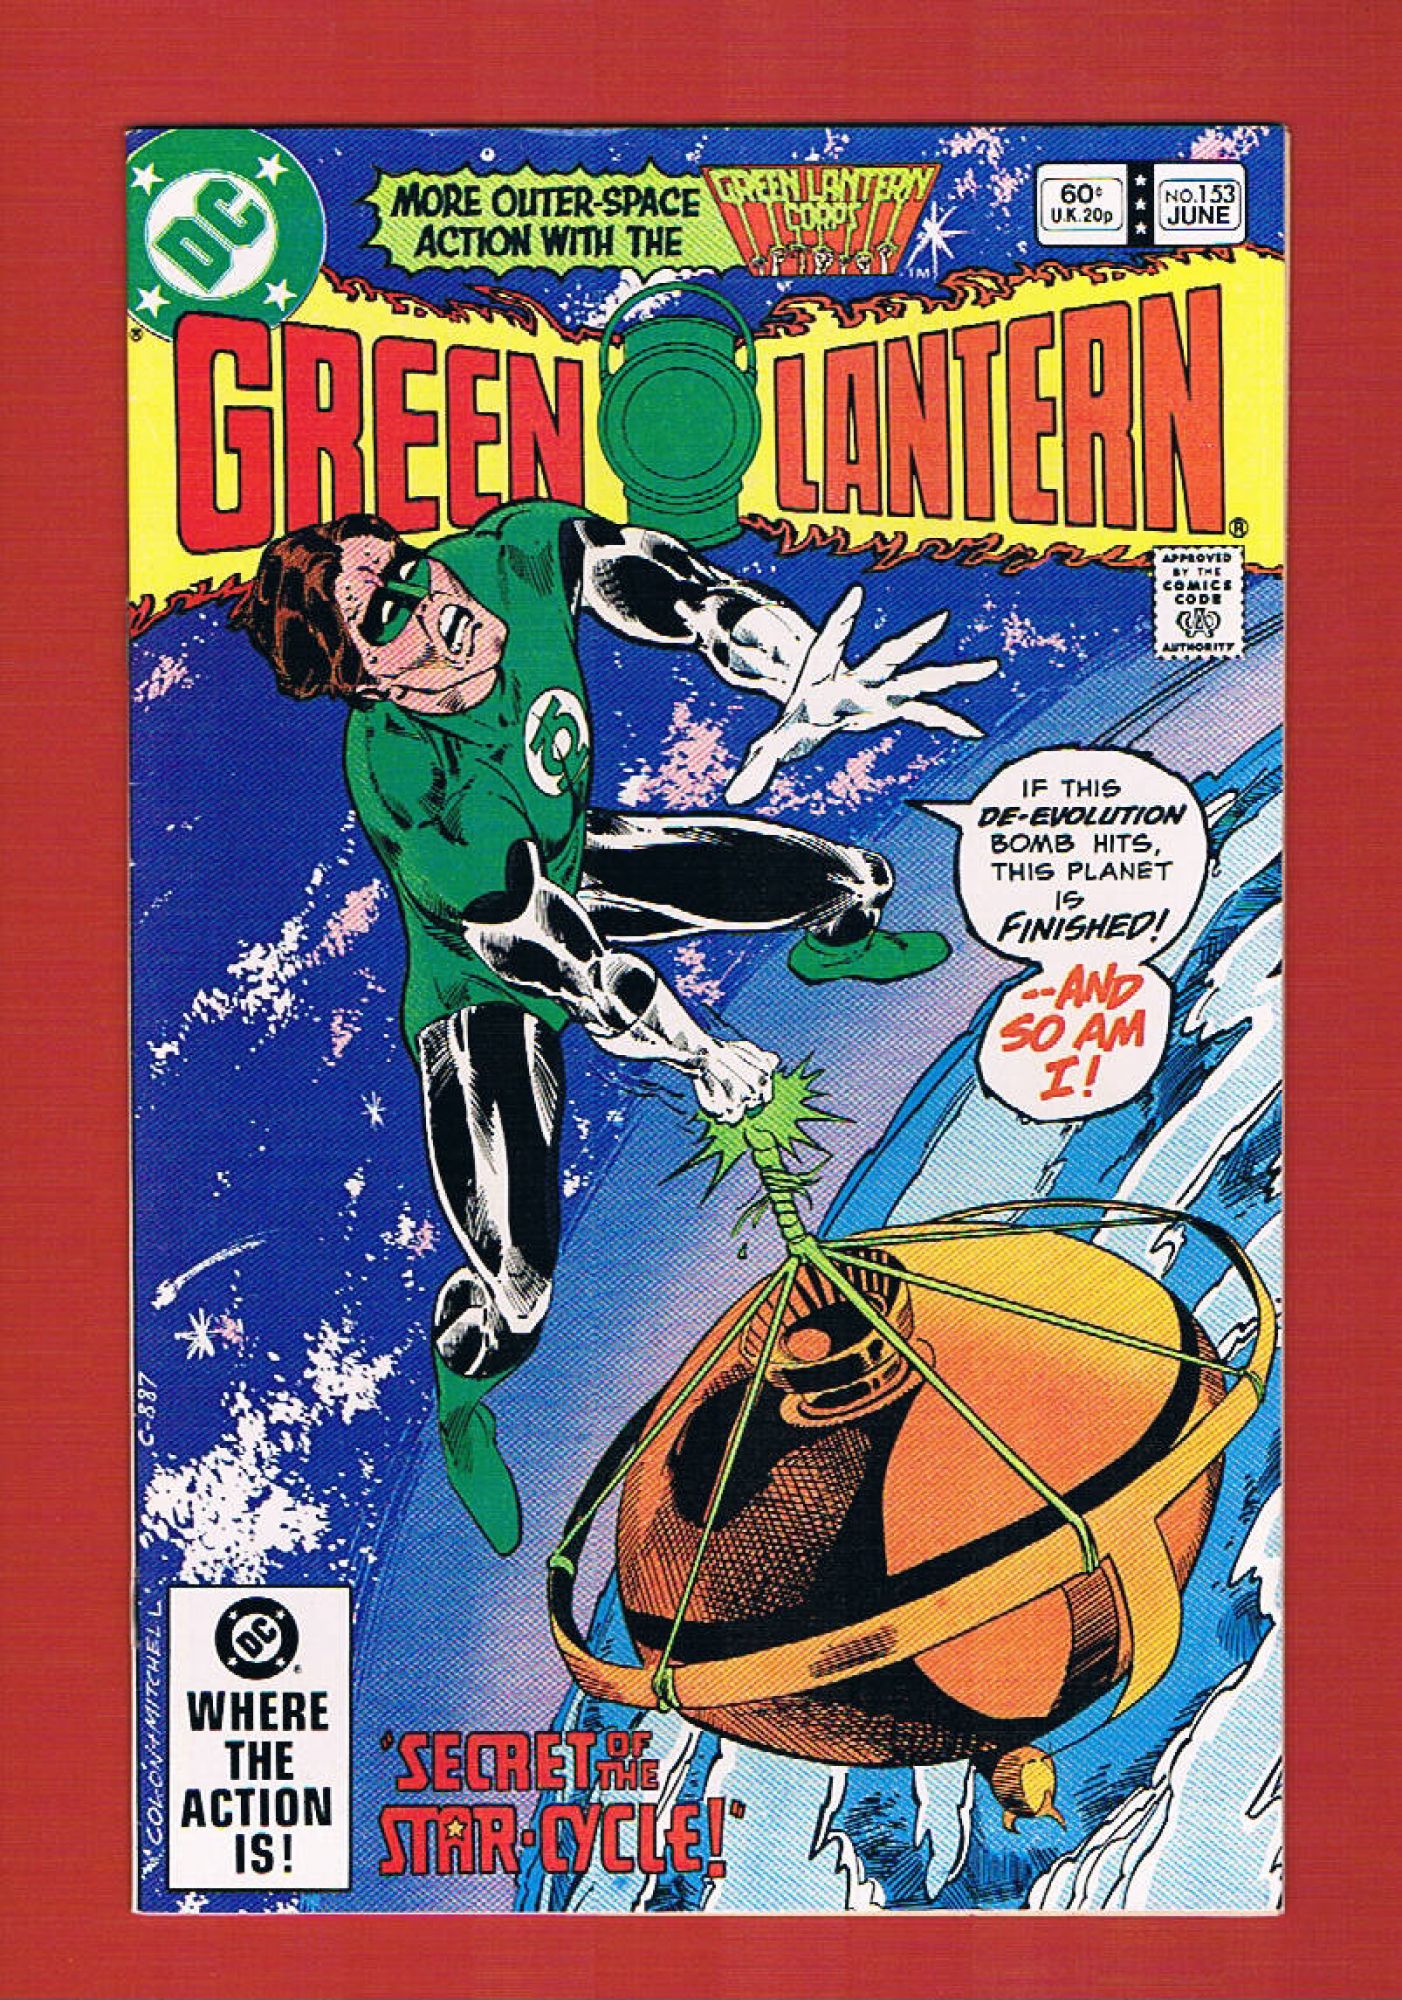 Green Lantern #153, Jun 1982, 9.2 NM-